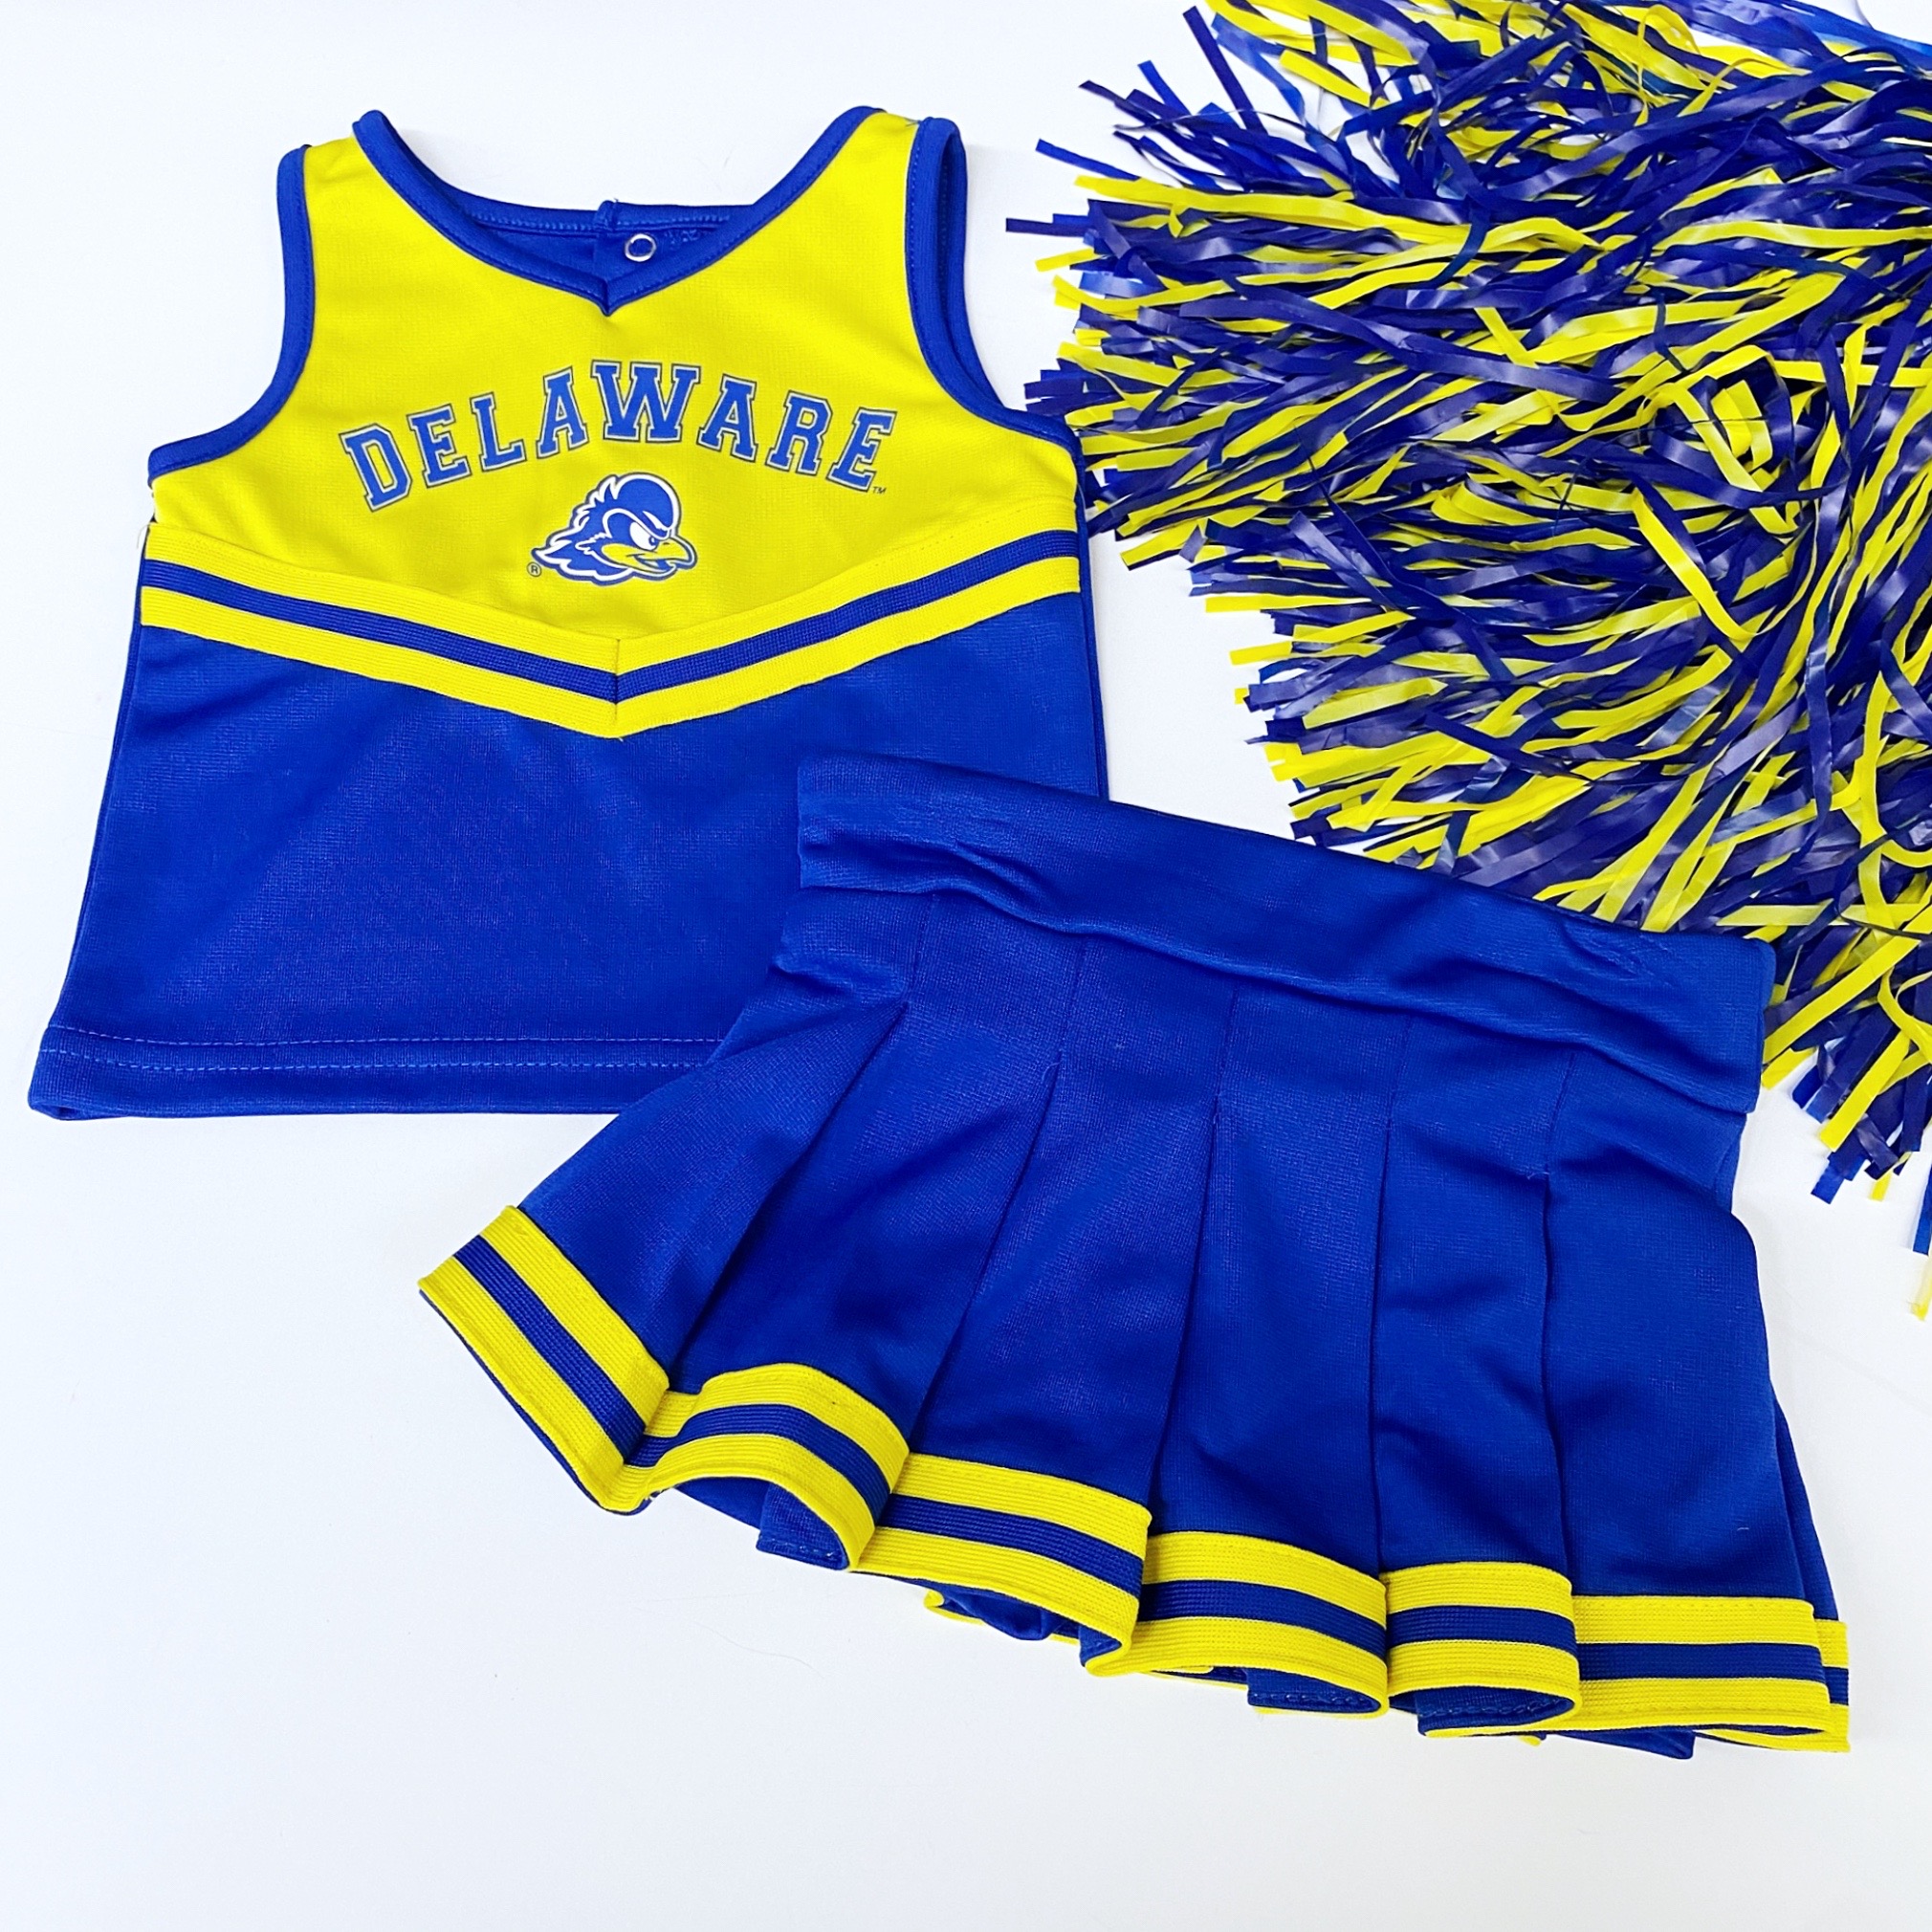 Delaware Youth Cheerleader Costume